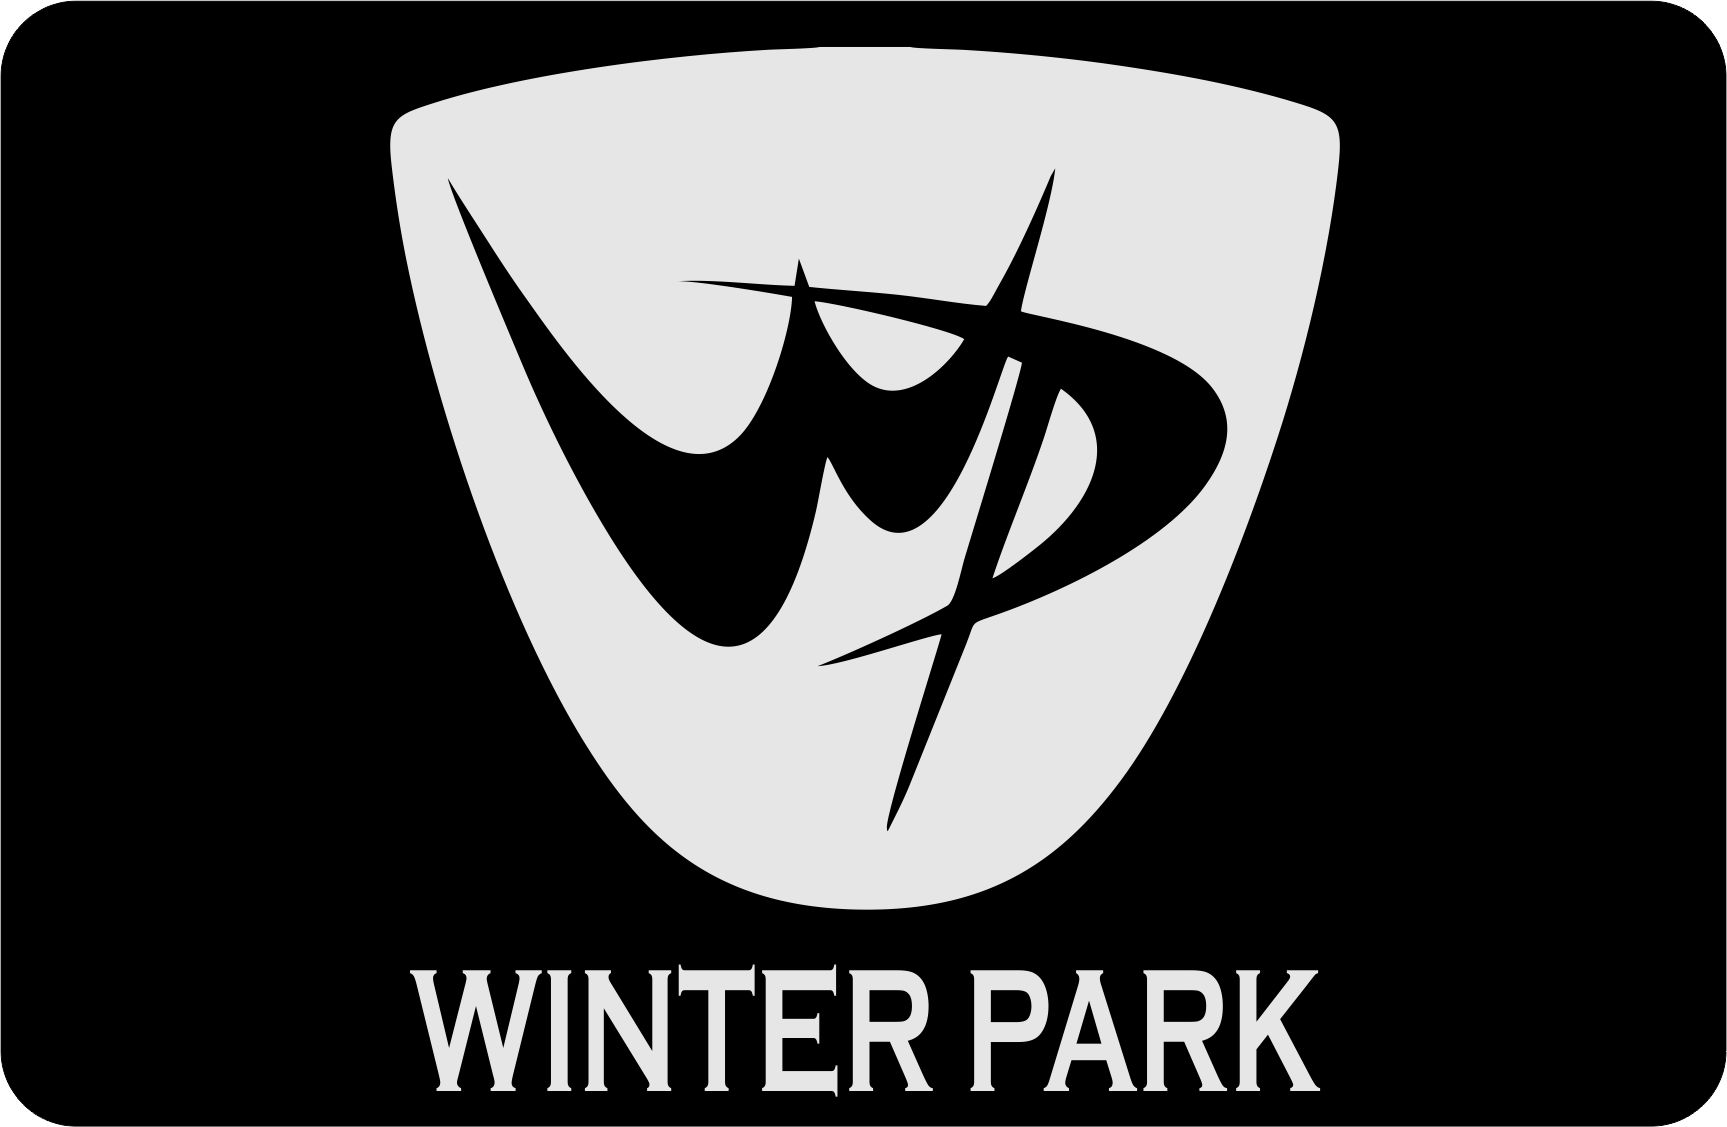 Winter Park - Custom trailer hitch cover